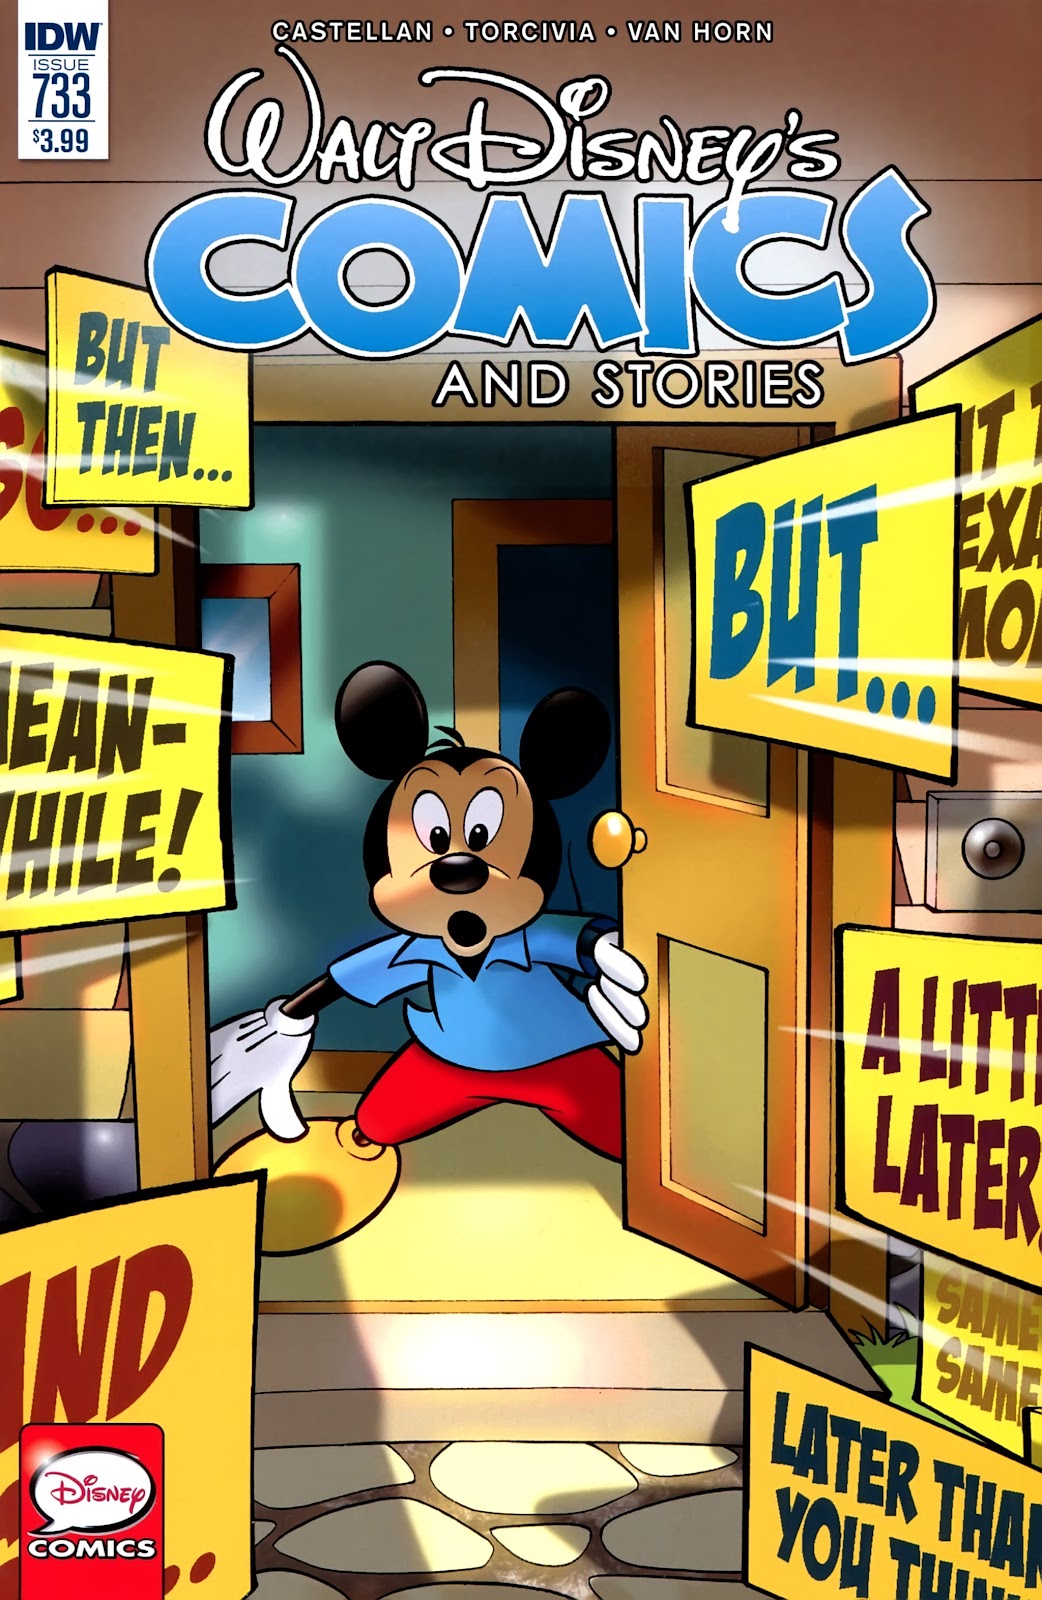 Walt Disneys Comics and Stories 733 Page 1